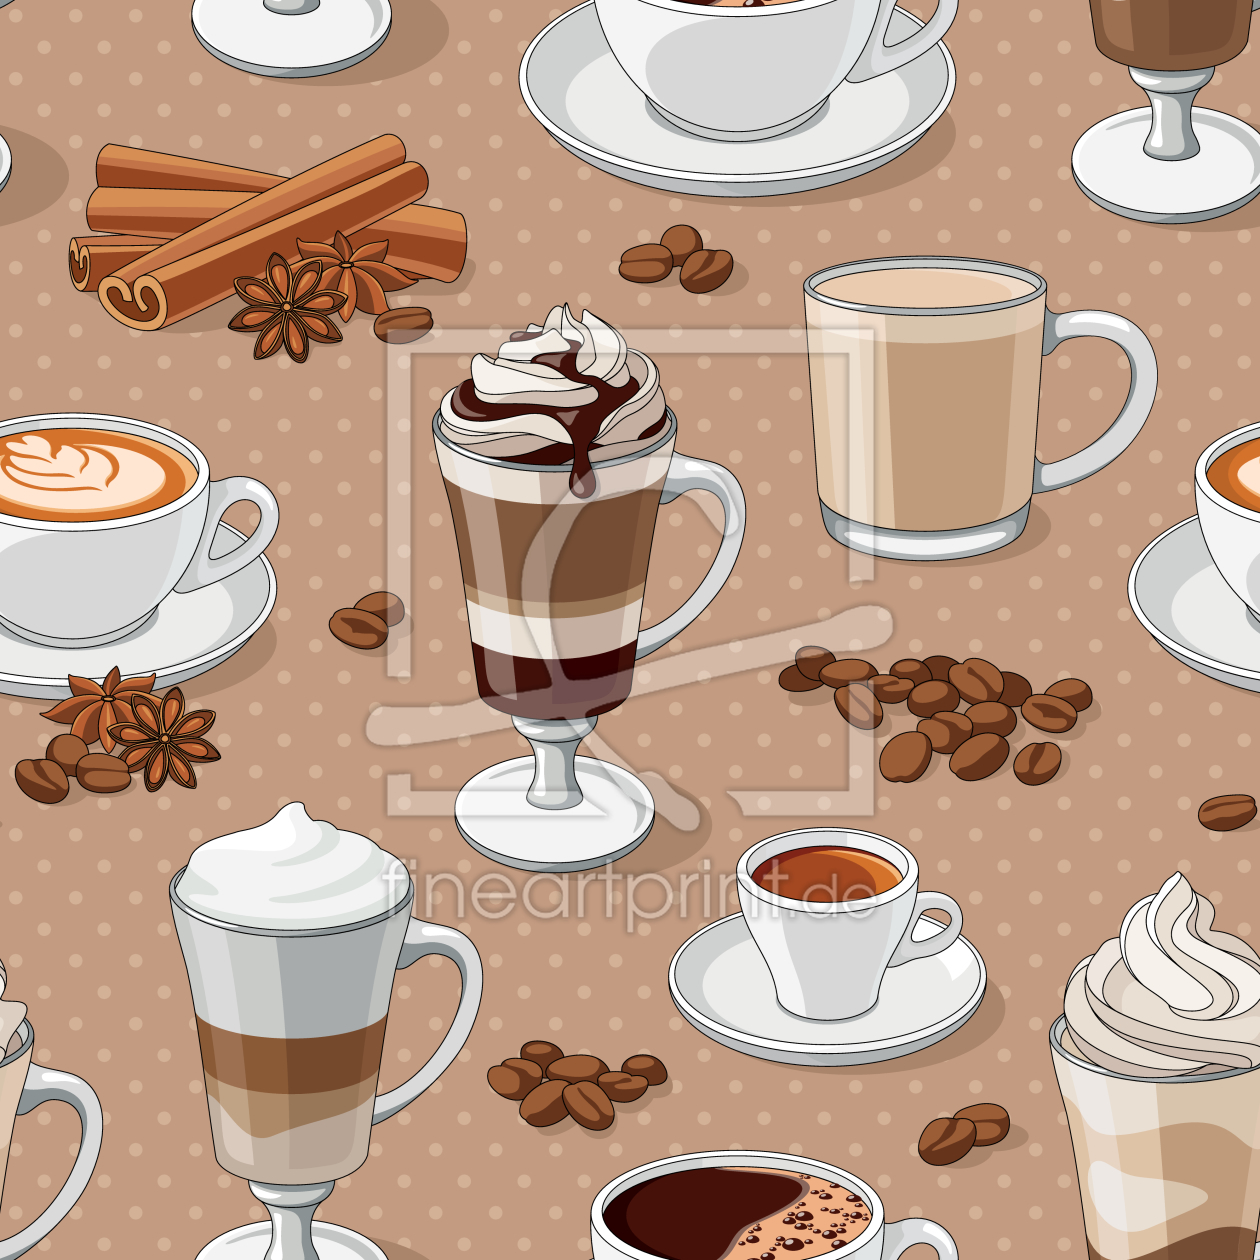 Bild-Nr.: 9014380 Kaffeelust erstellt von patterndesigns-com